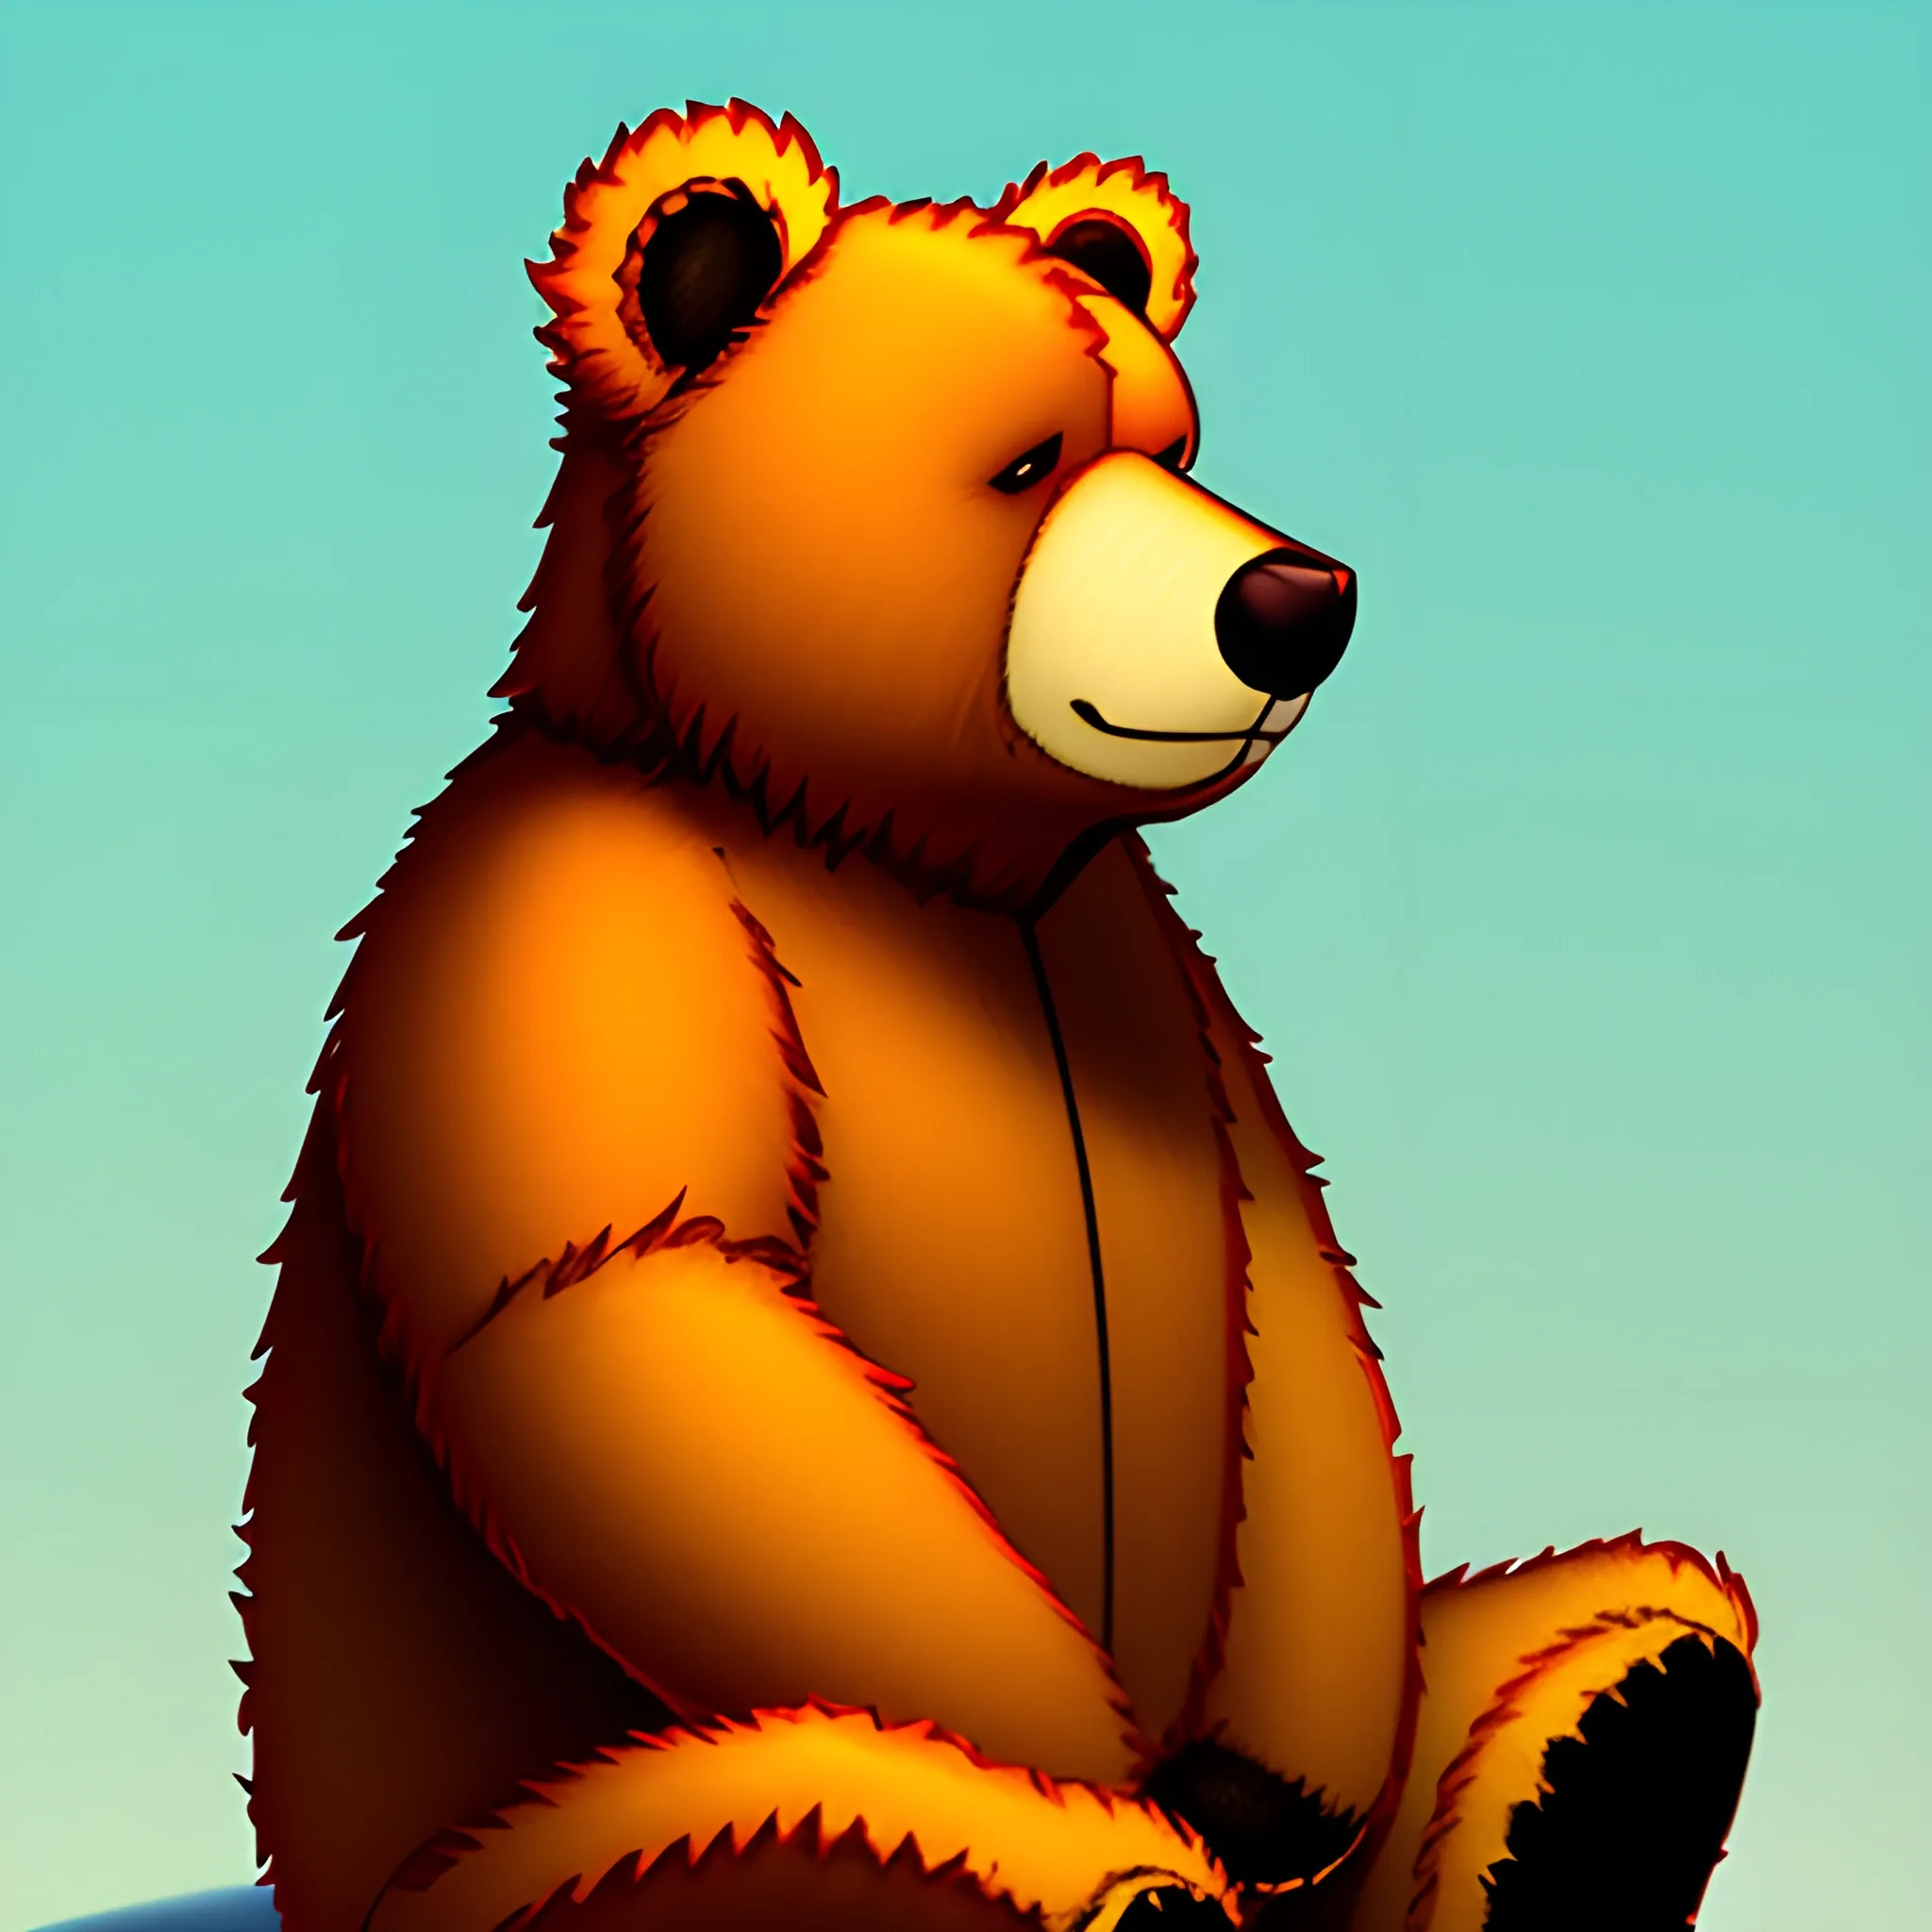 illustration of small teddy bear sitting in profile, illuminated